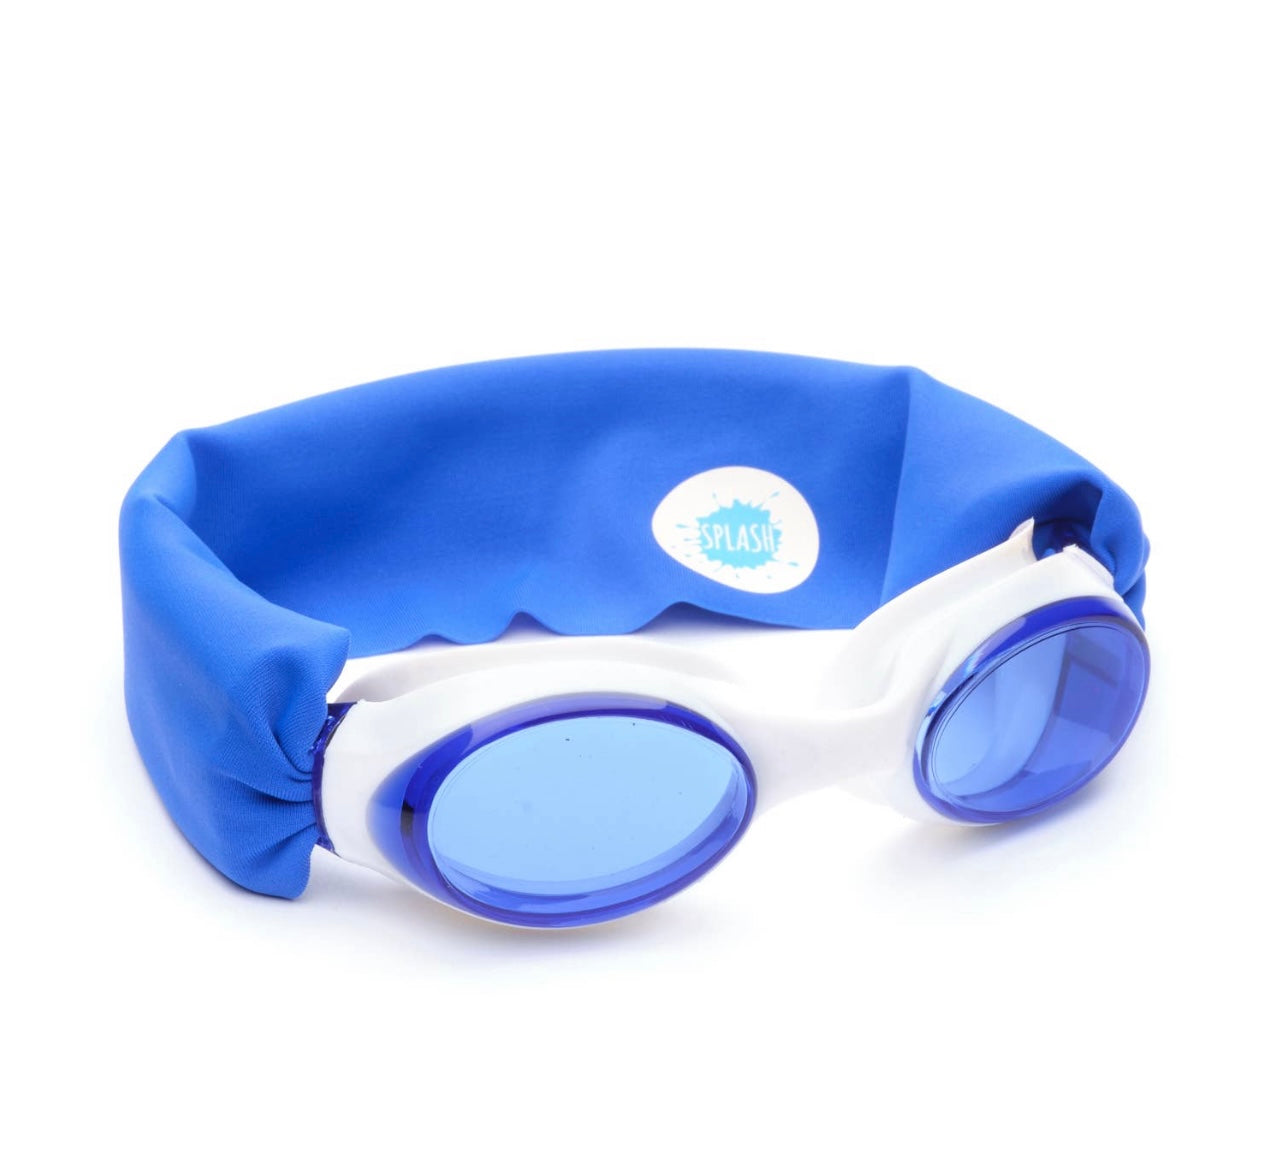 Splash Swim Goggles {Multiple Styles Available}